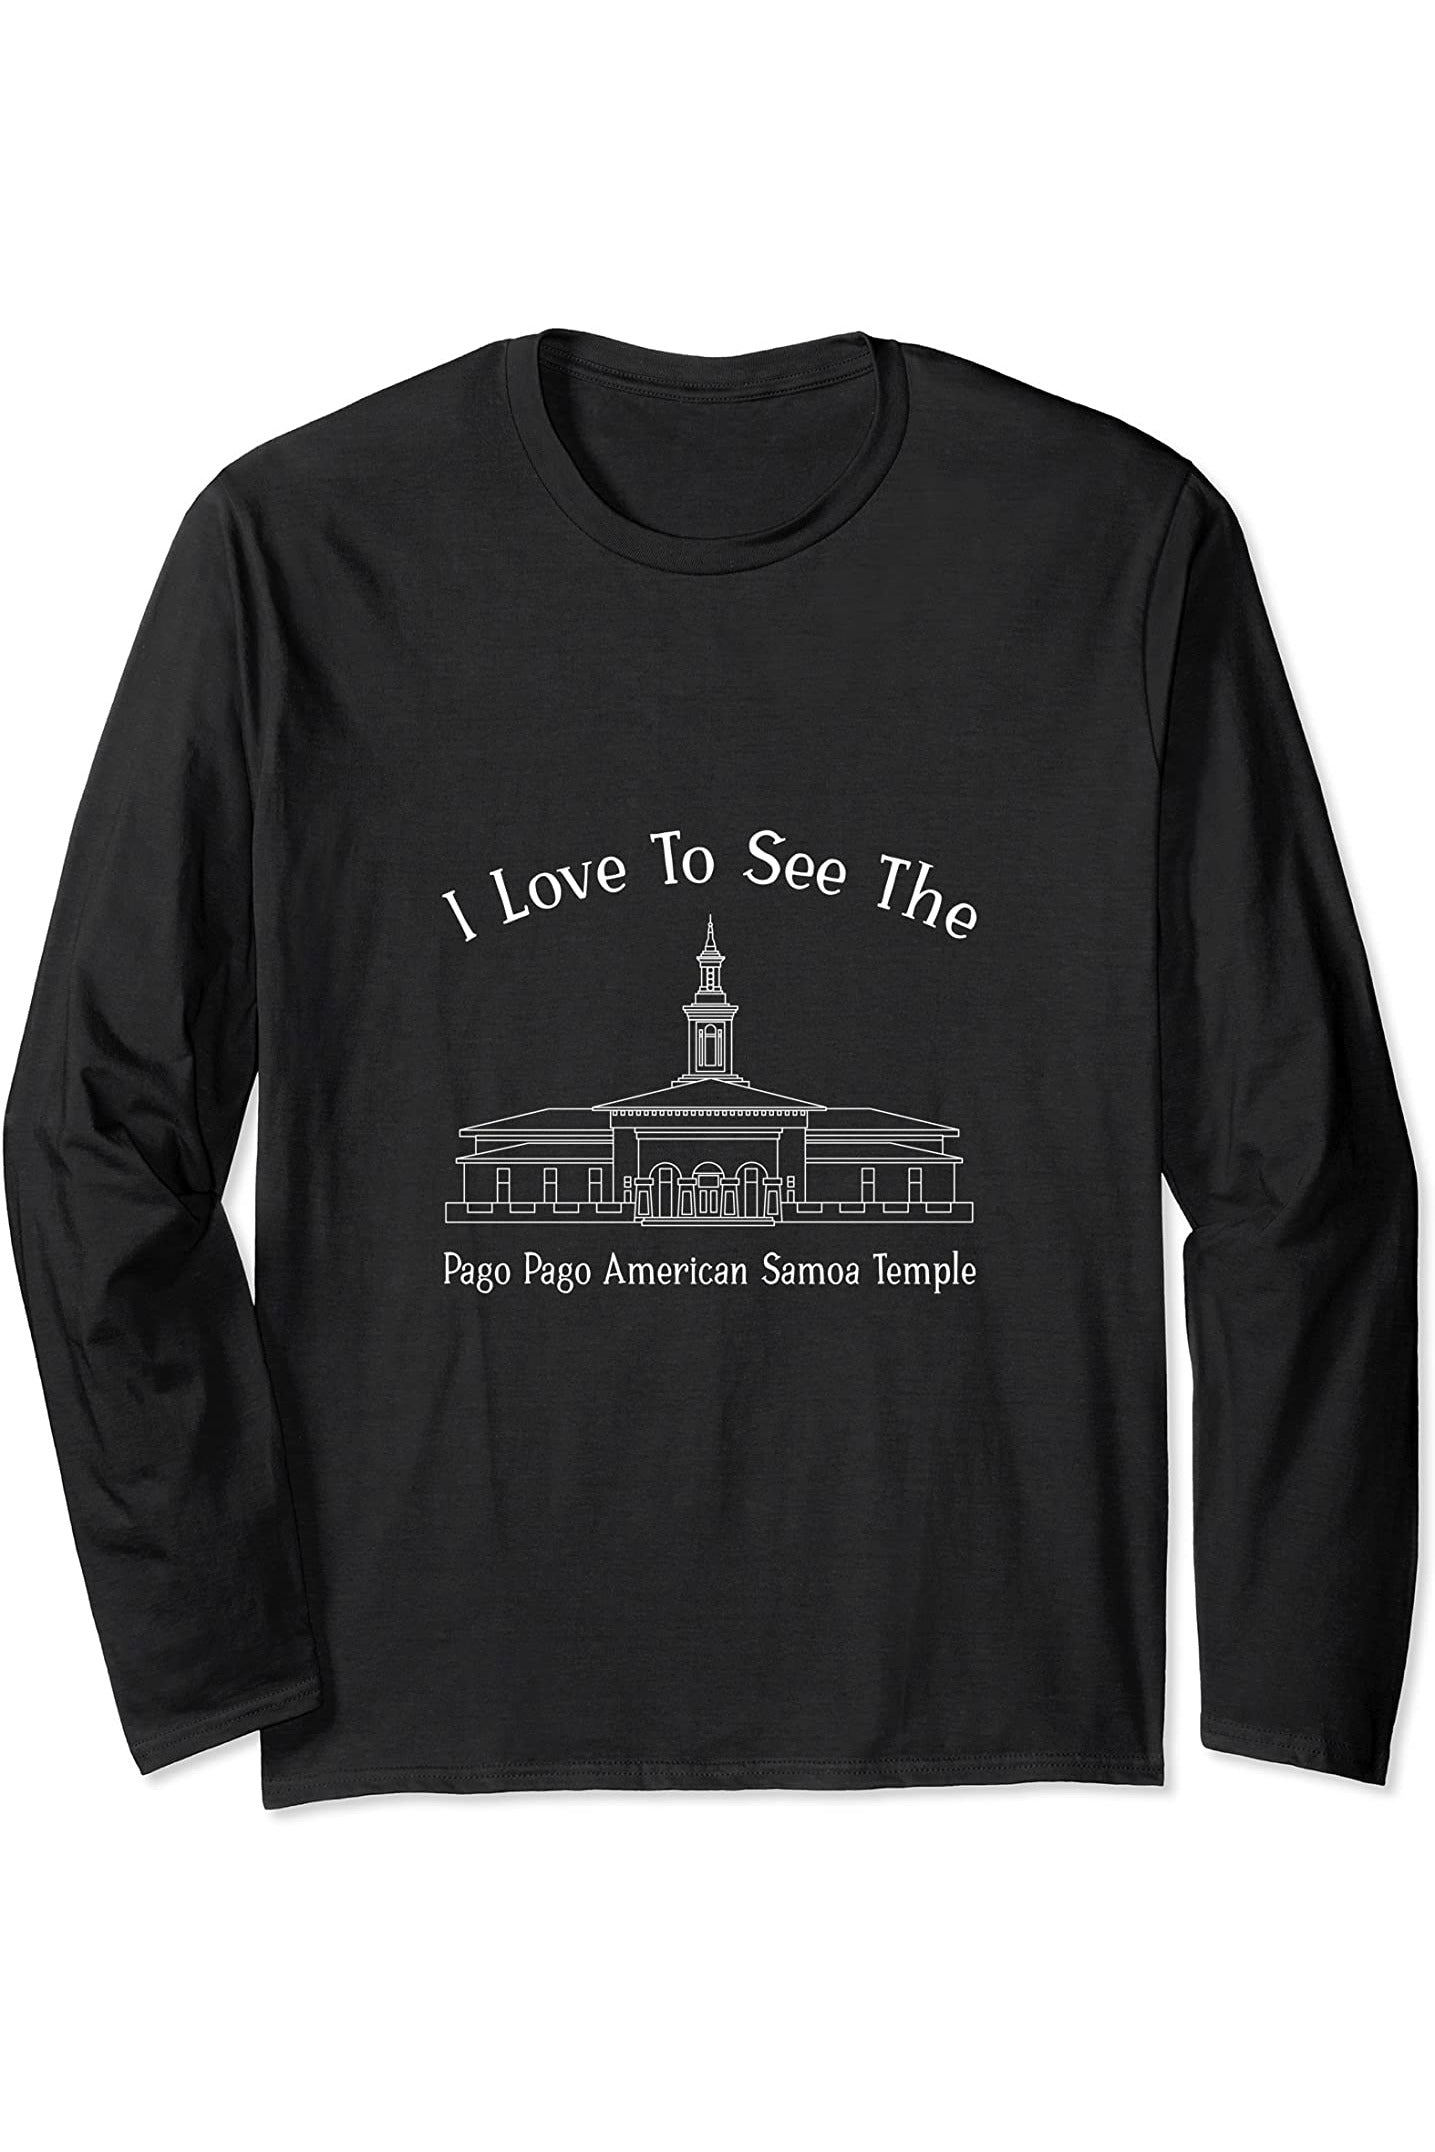 Pago Pago American Samoa Temple Long Sleeve T-Shirt - Happy Style (English) US